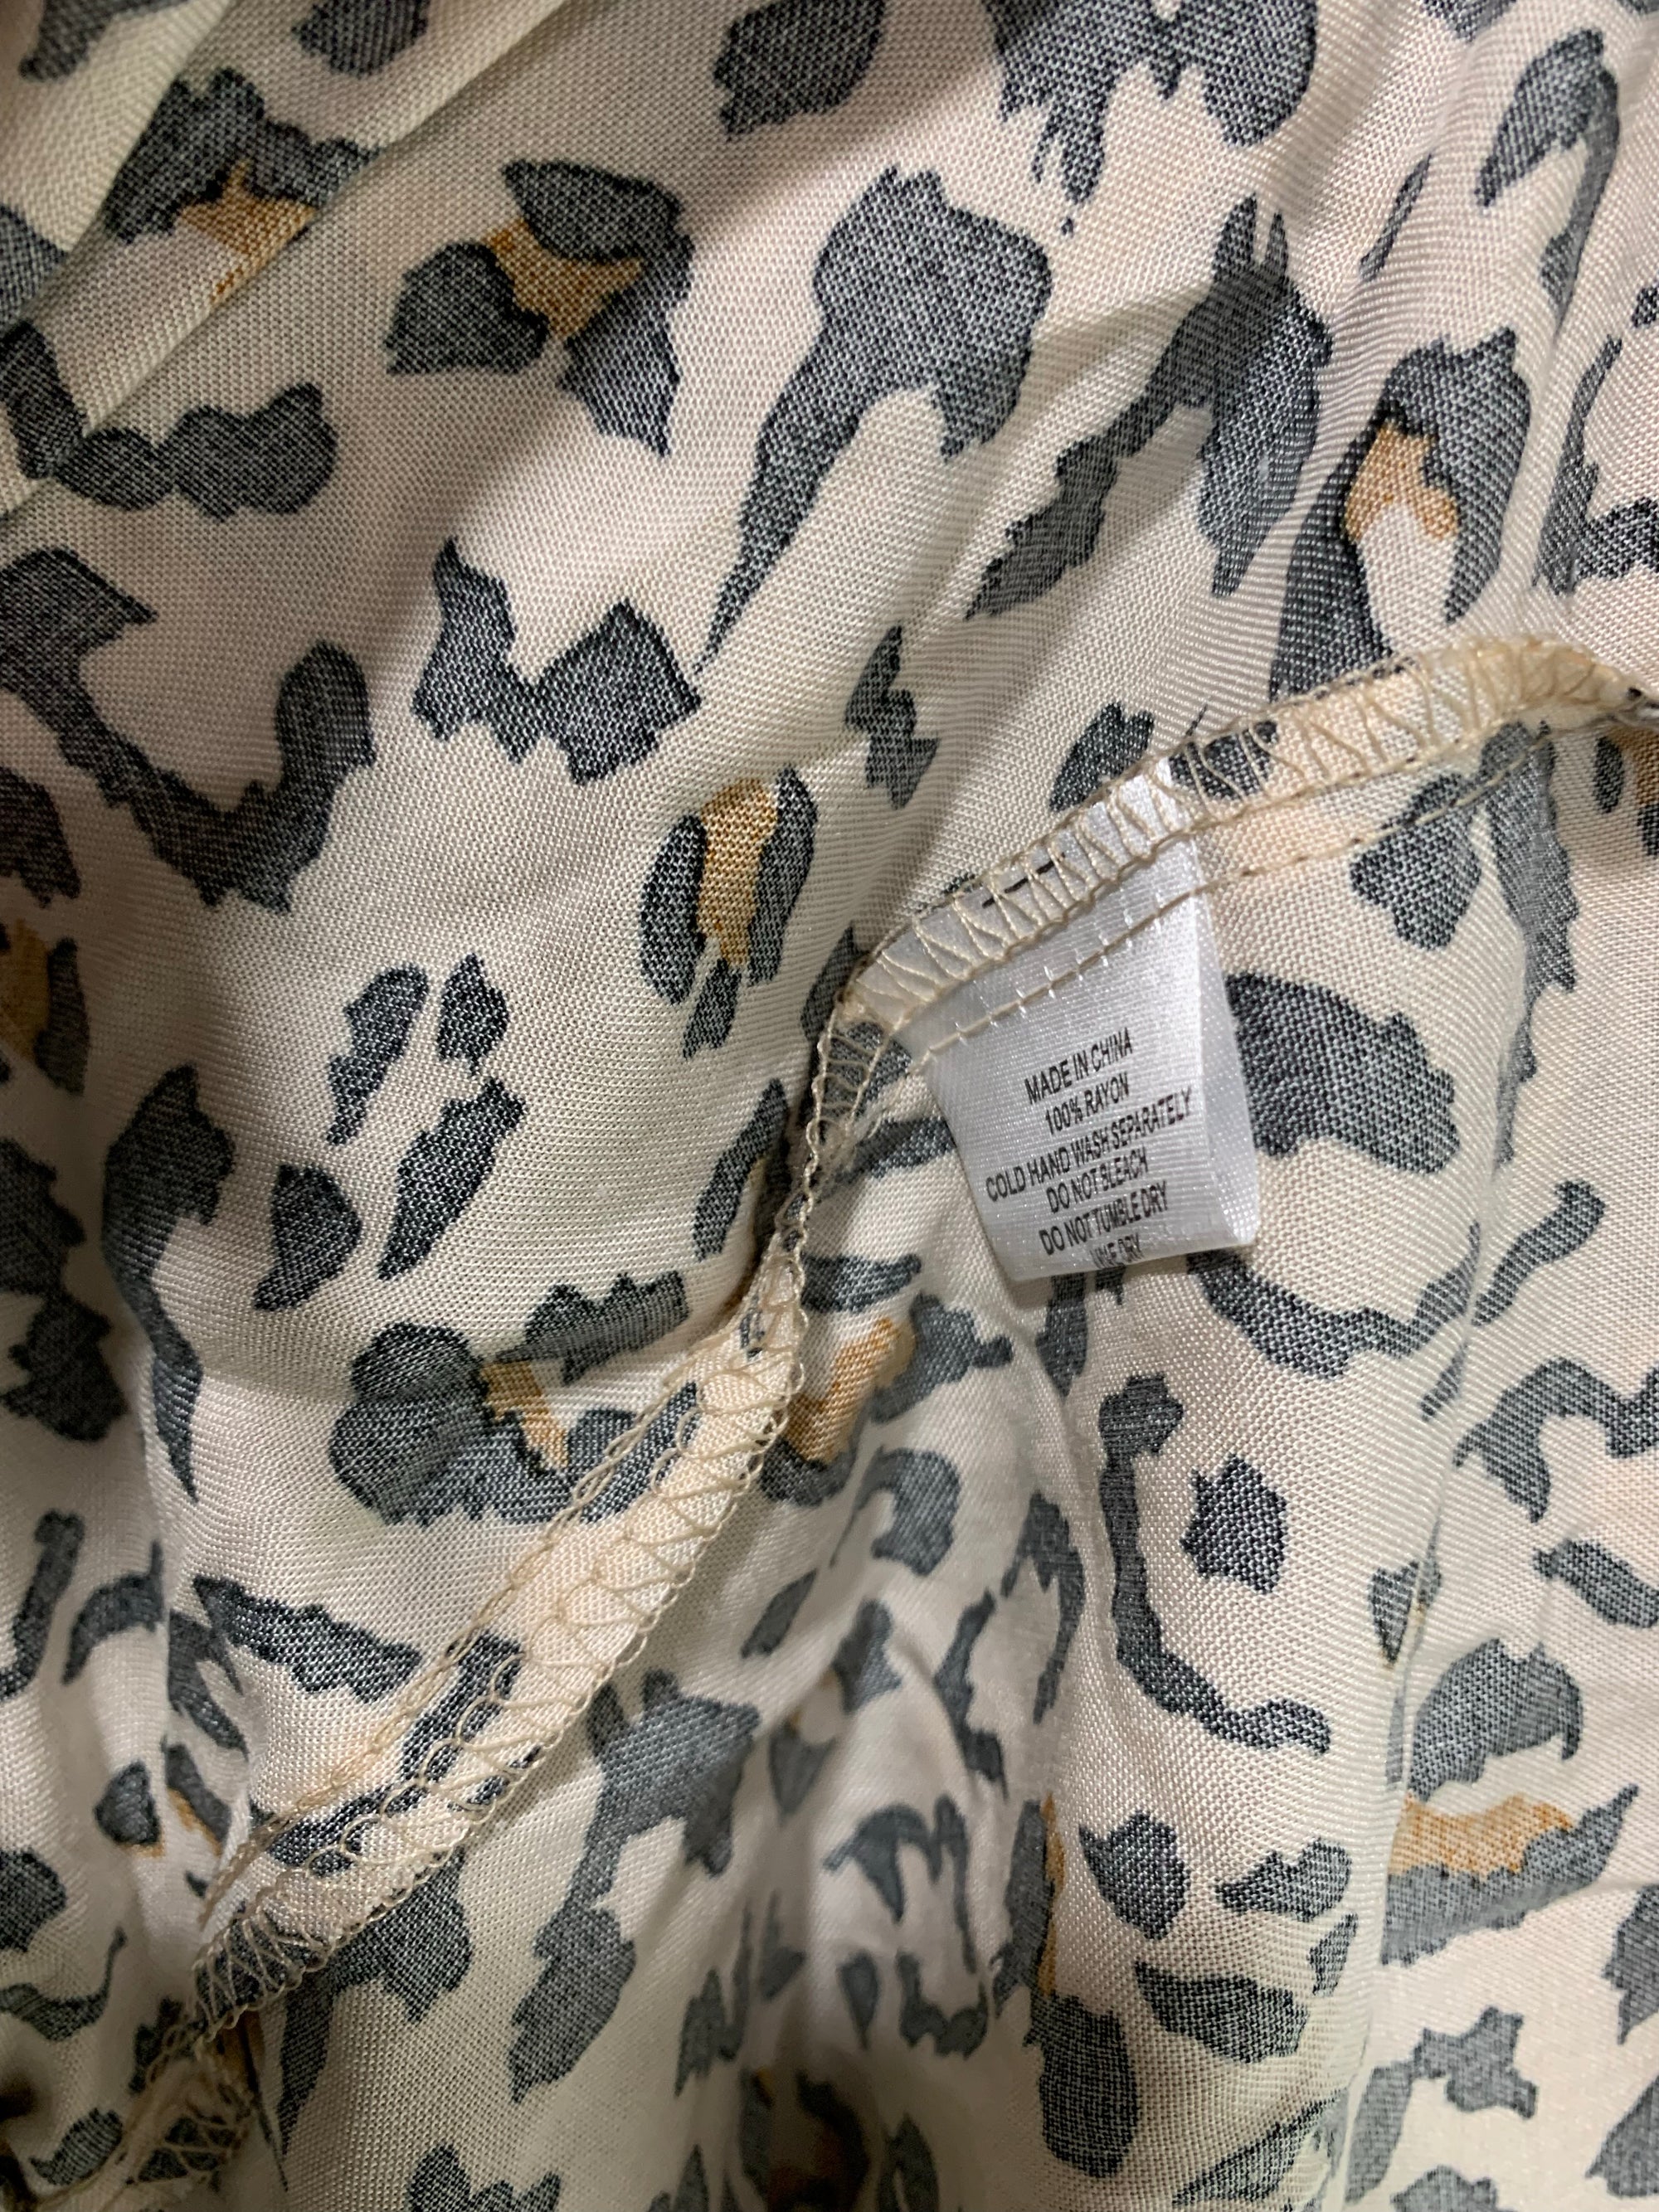 Maxi Dress Leopard Print in Beige & Black - Silver Wishes